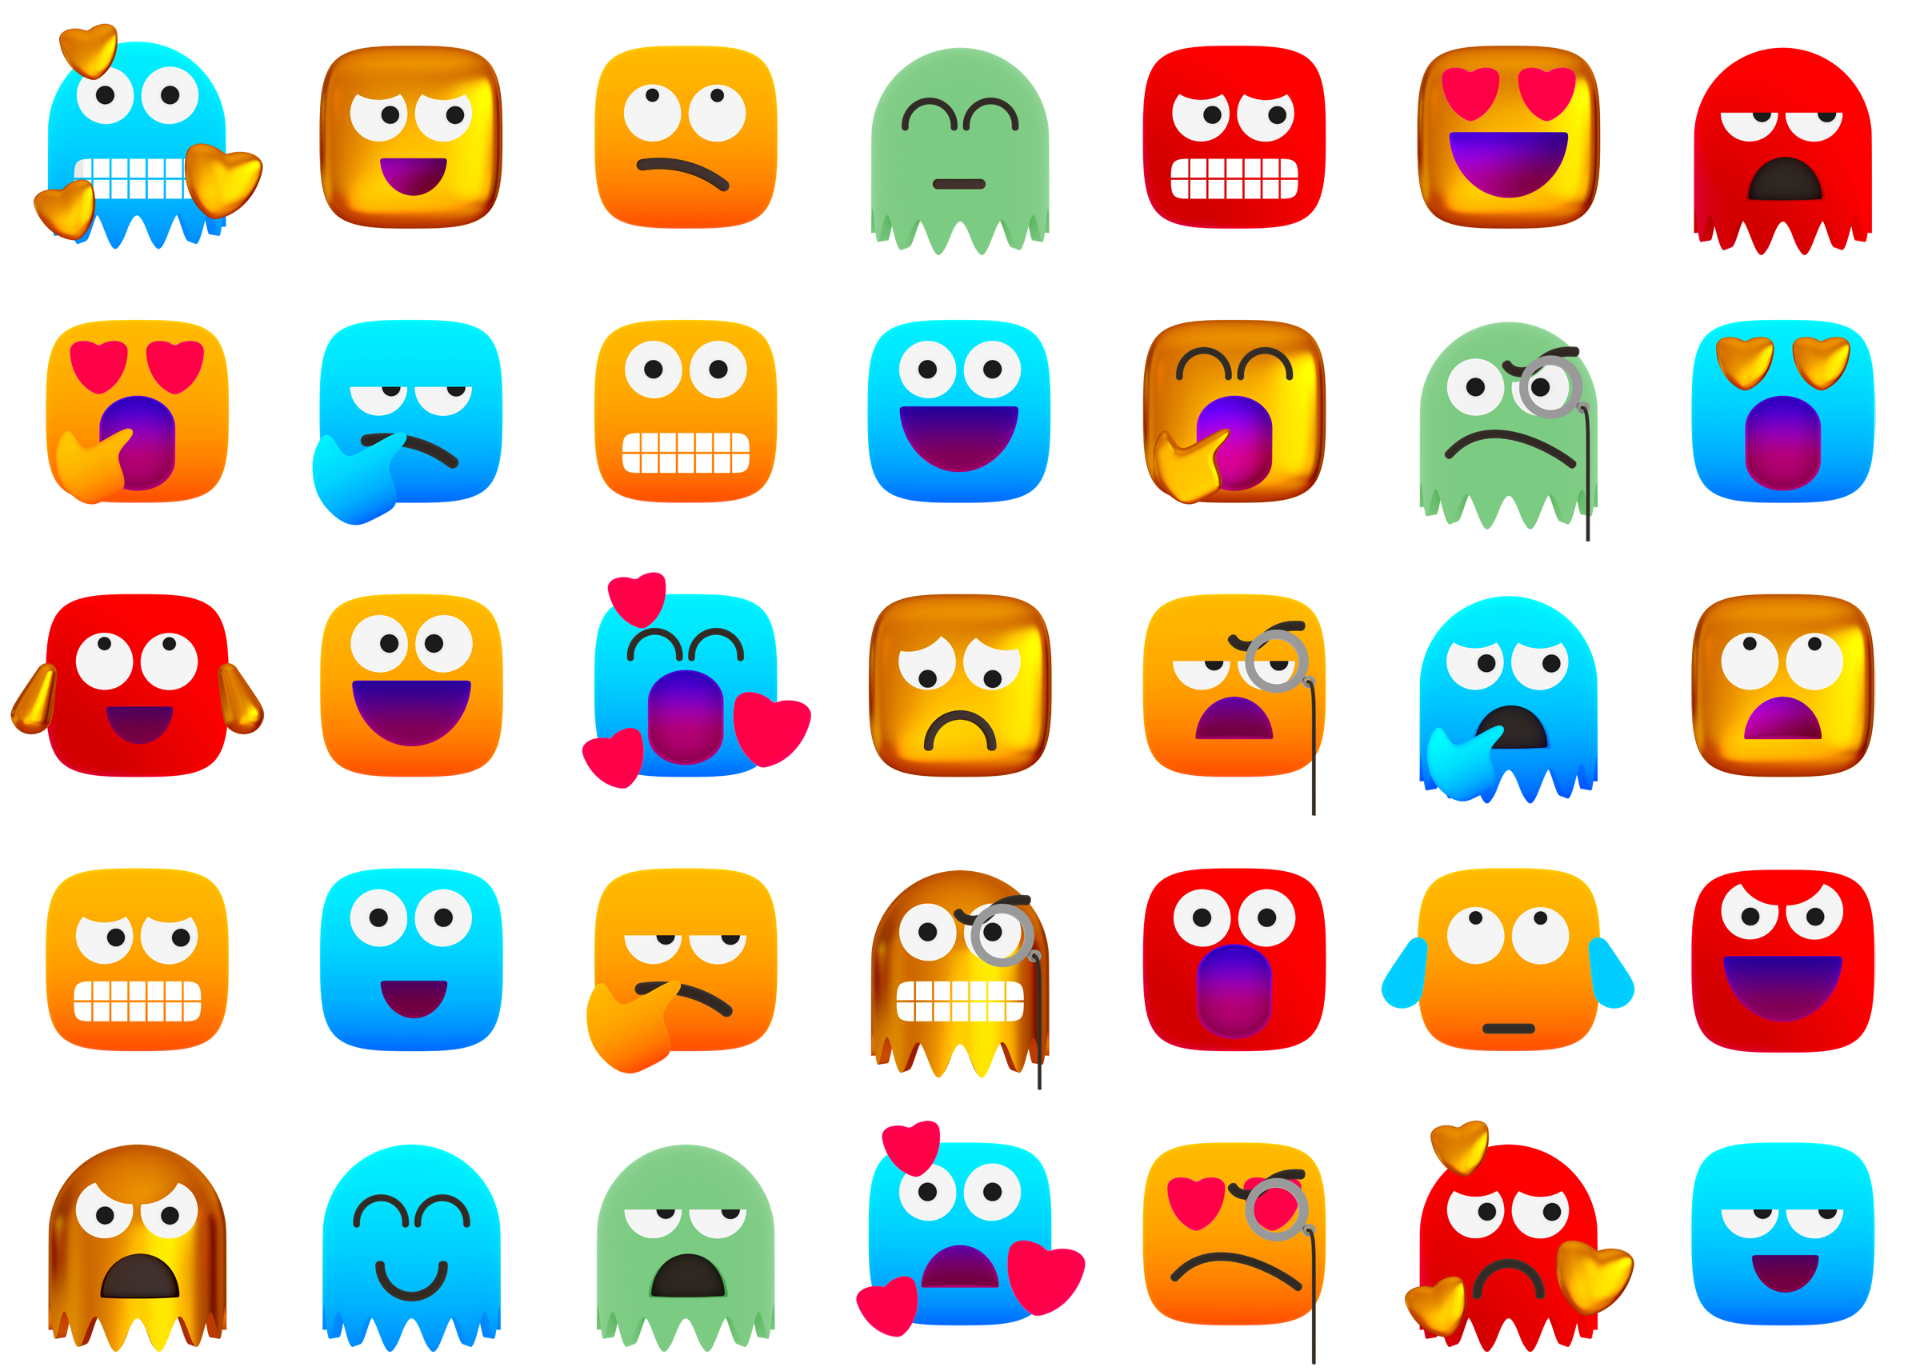 A set of 3D emojis